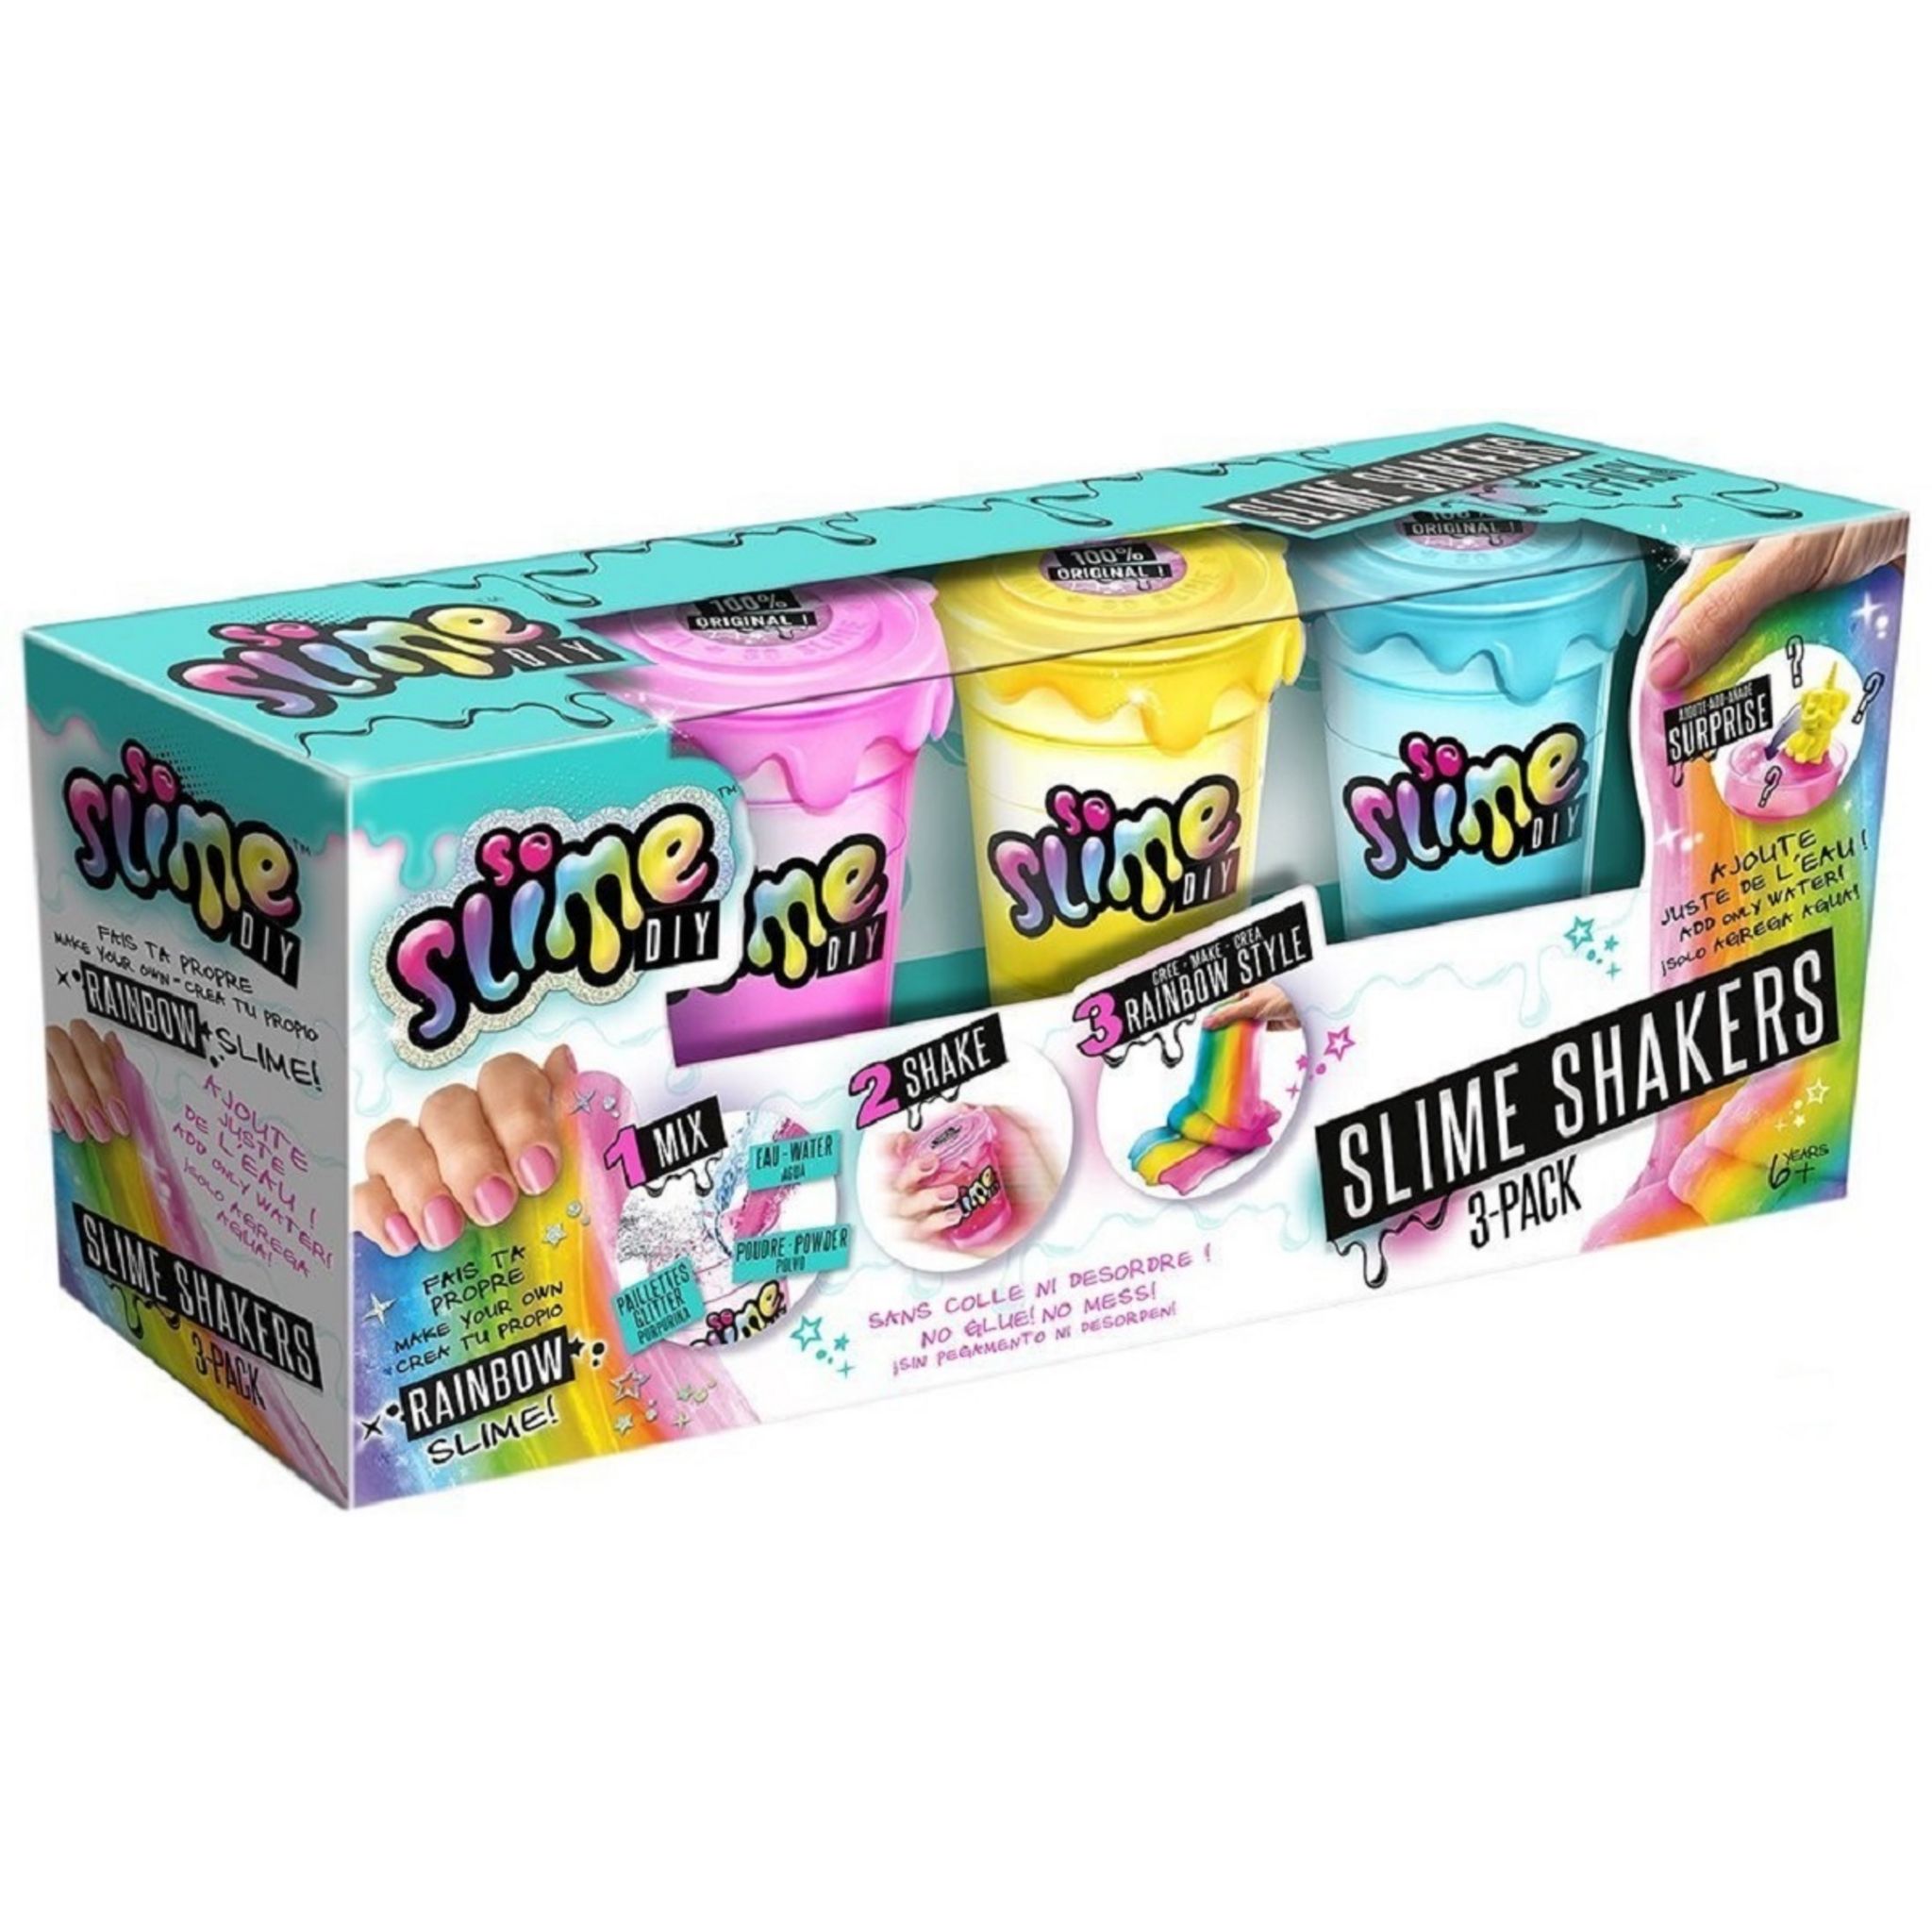 CANAL TOYS - Slime - Mix'in Kit - Pack 10 Slimes pour Enfant de 6